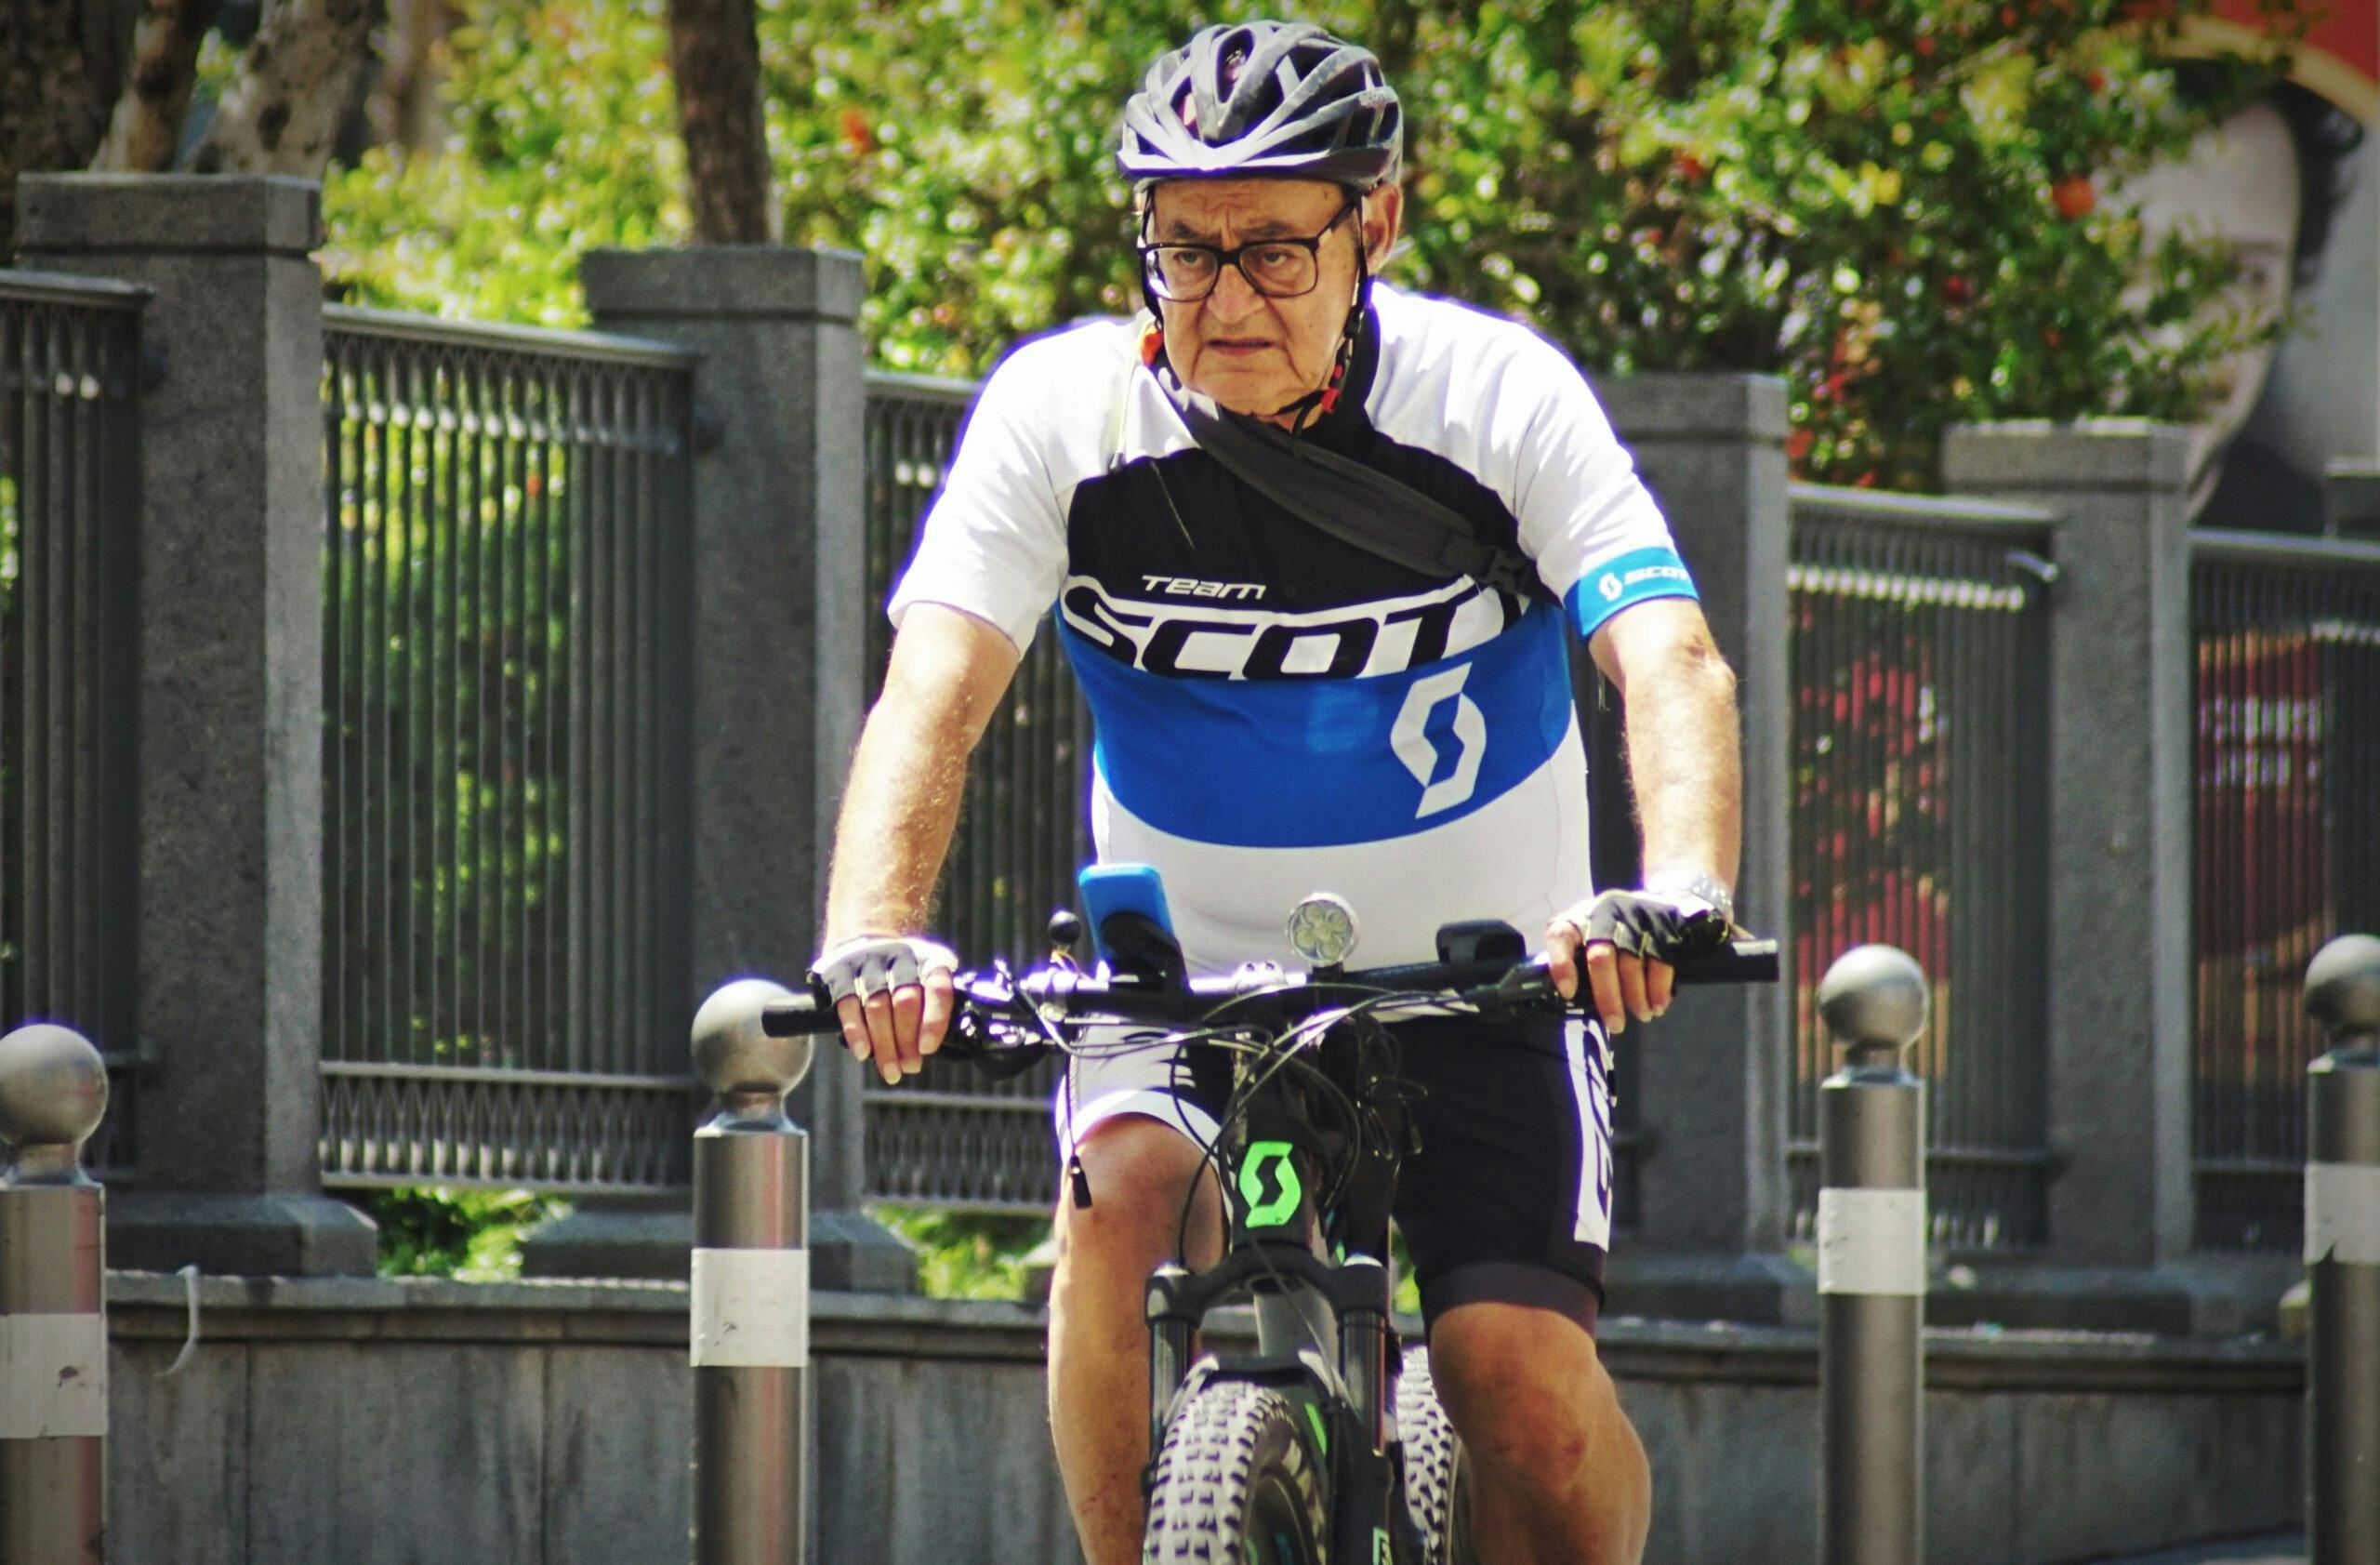 a-senior-lifestyle-person-bike-sport-outdoor-biking-retirement-cyclist-exercise-leisure-road-wellness_t20_yXyAQ0